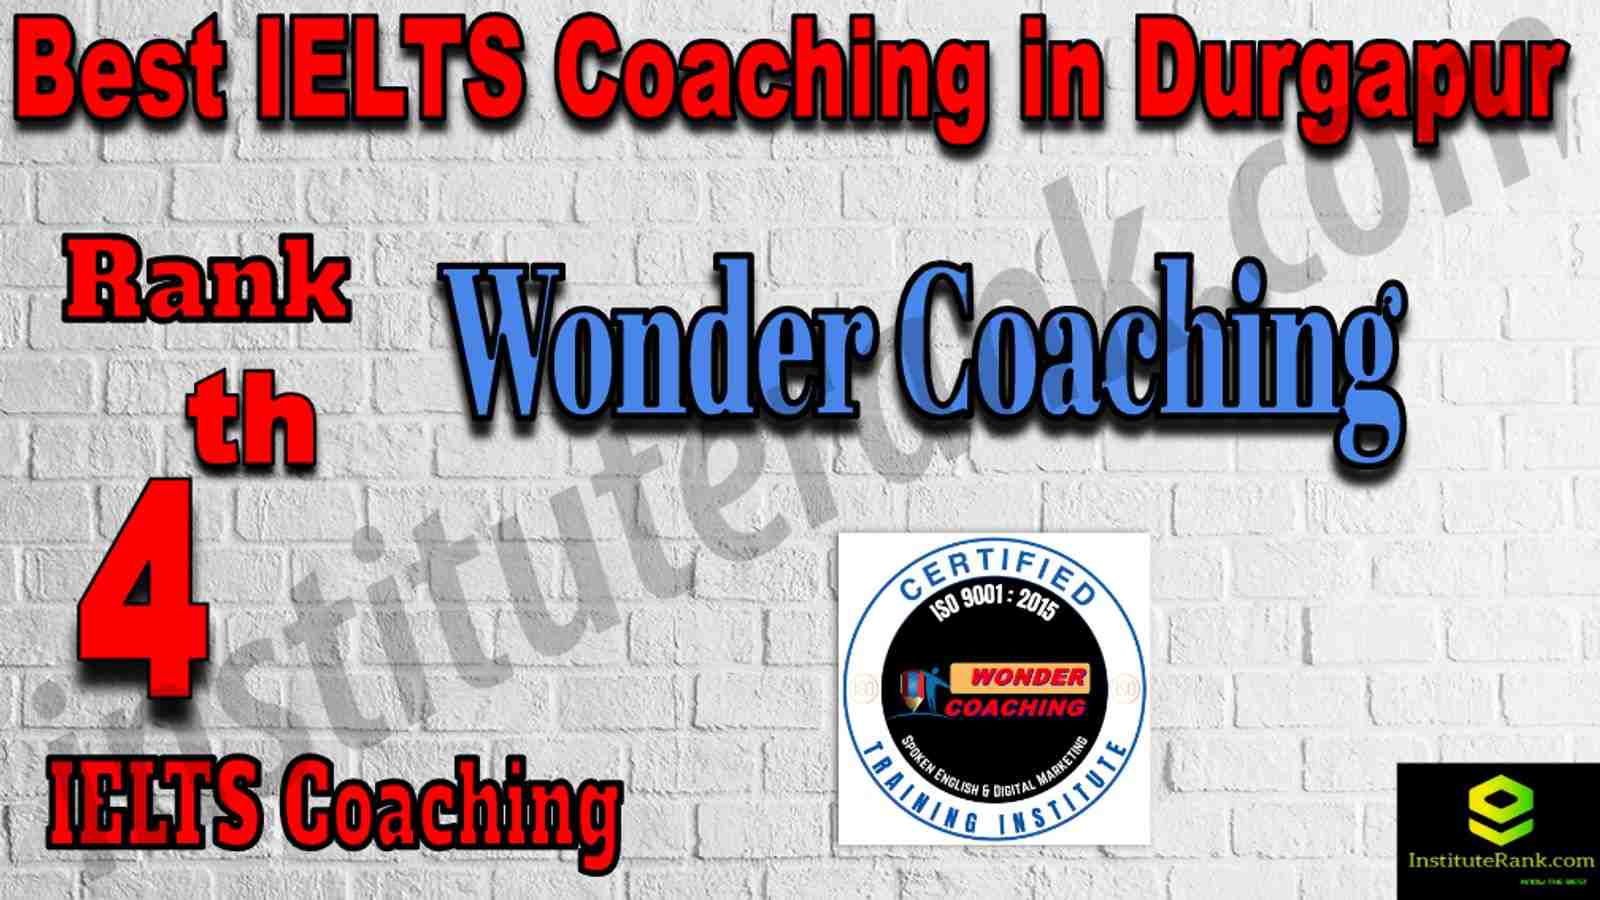 4th Best IELTS Coaching in Durgapur